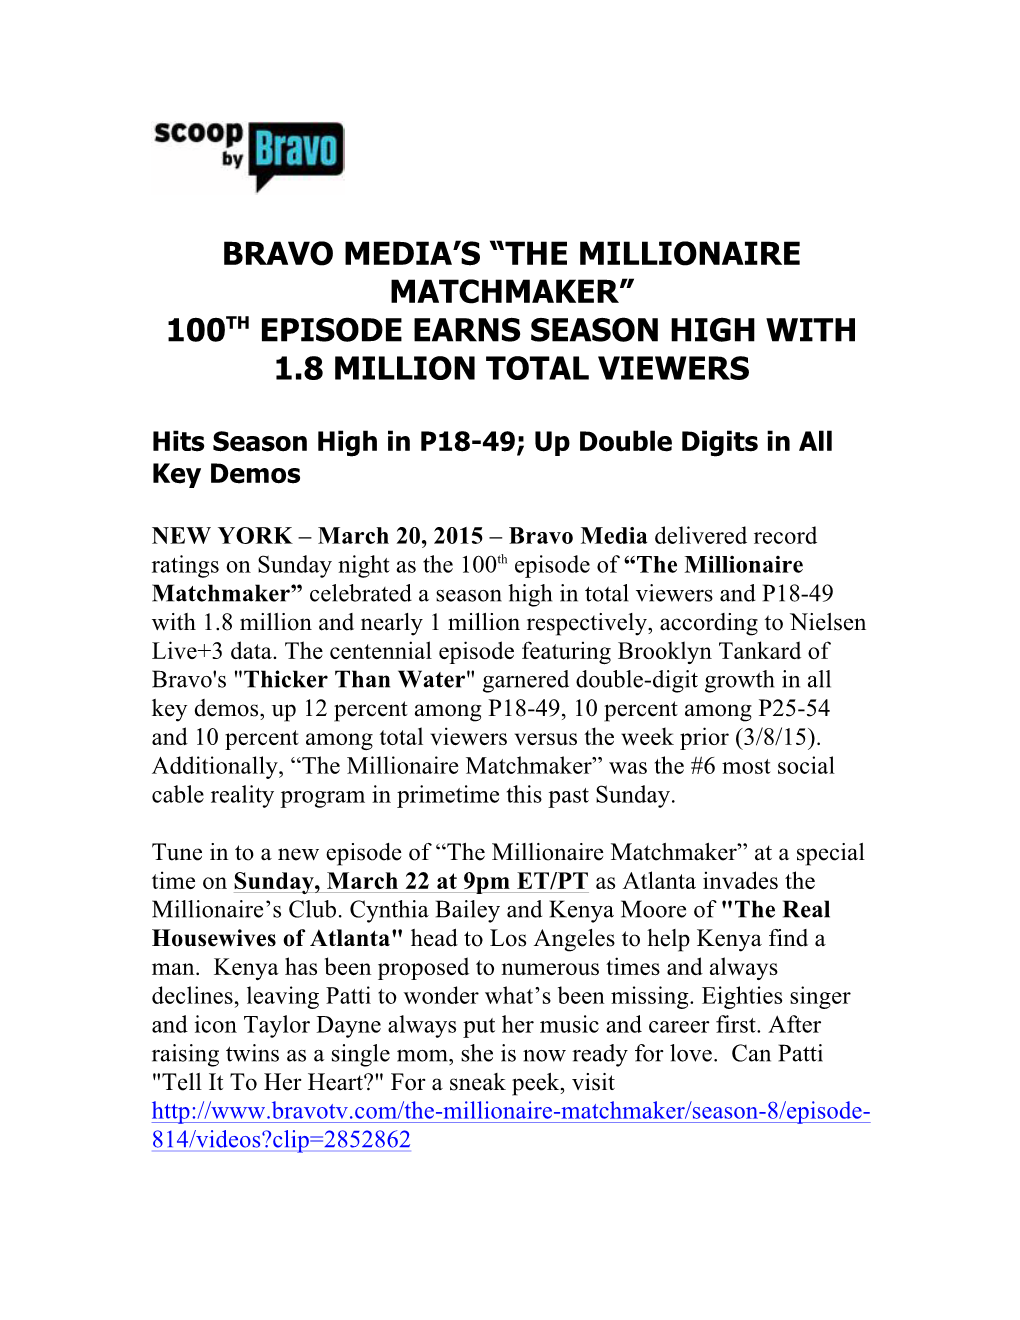 Bravo Media's “The Millionaire Matchmaker